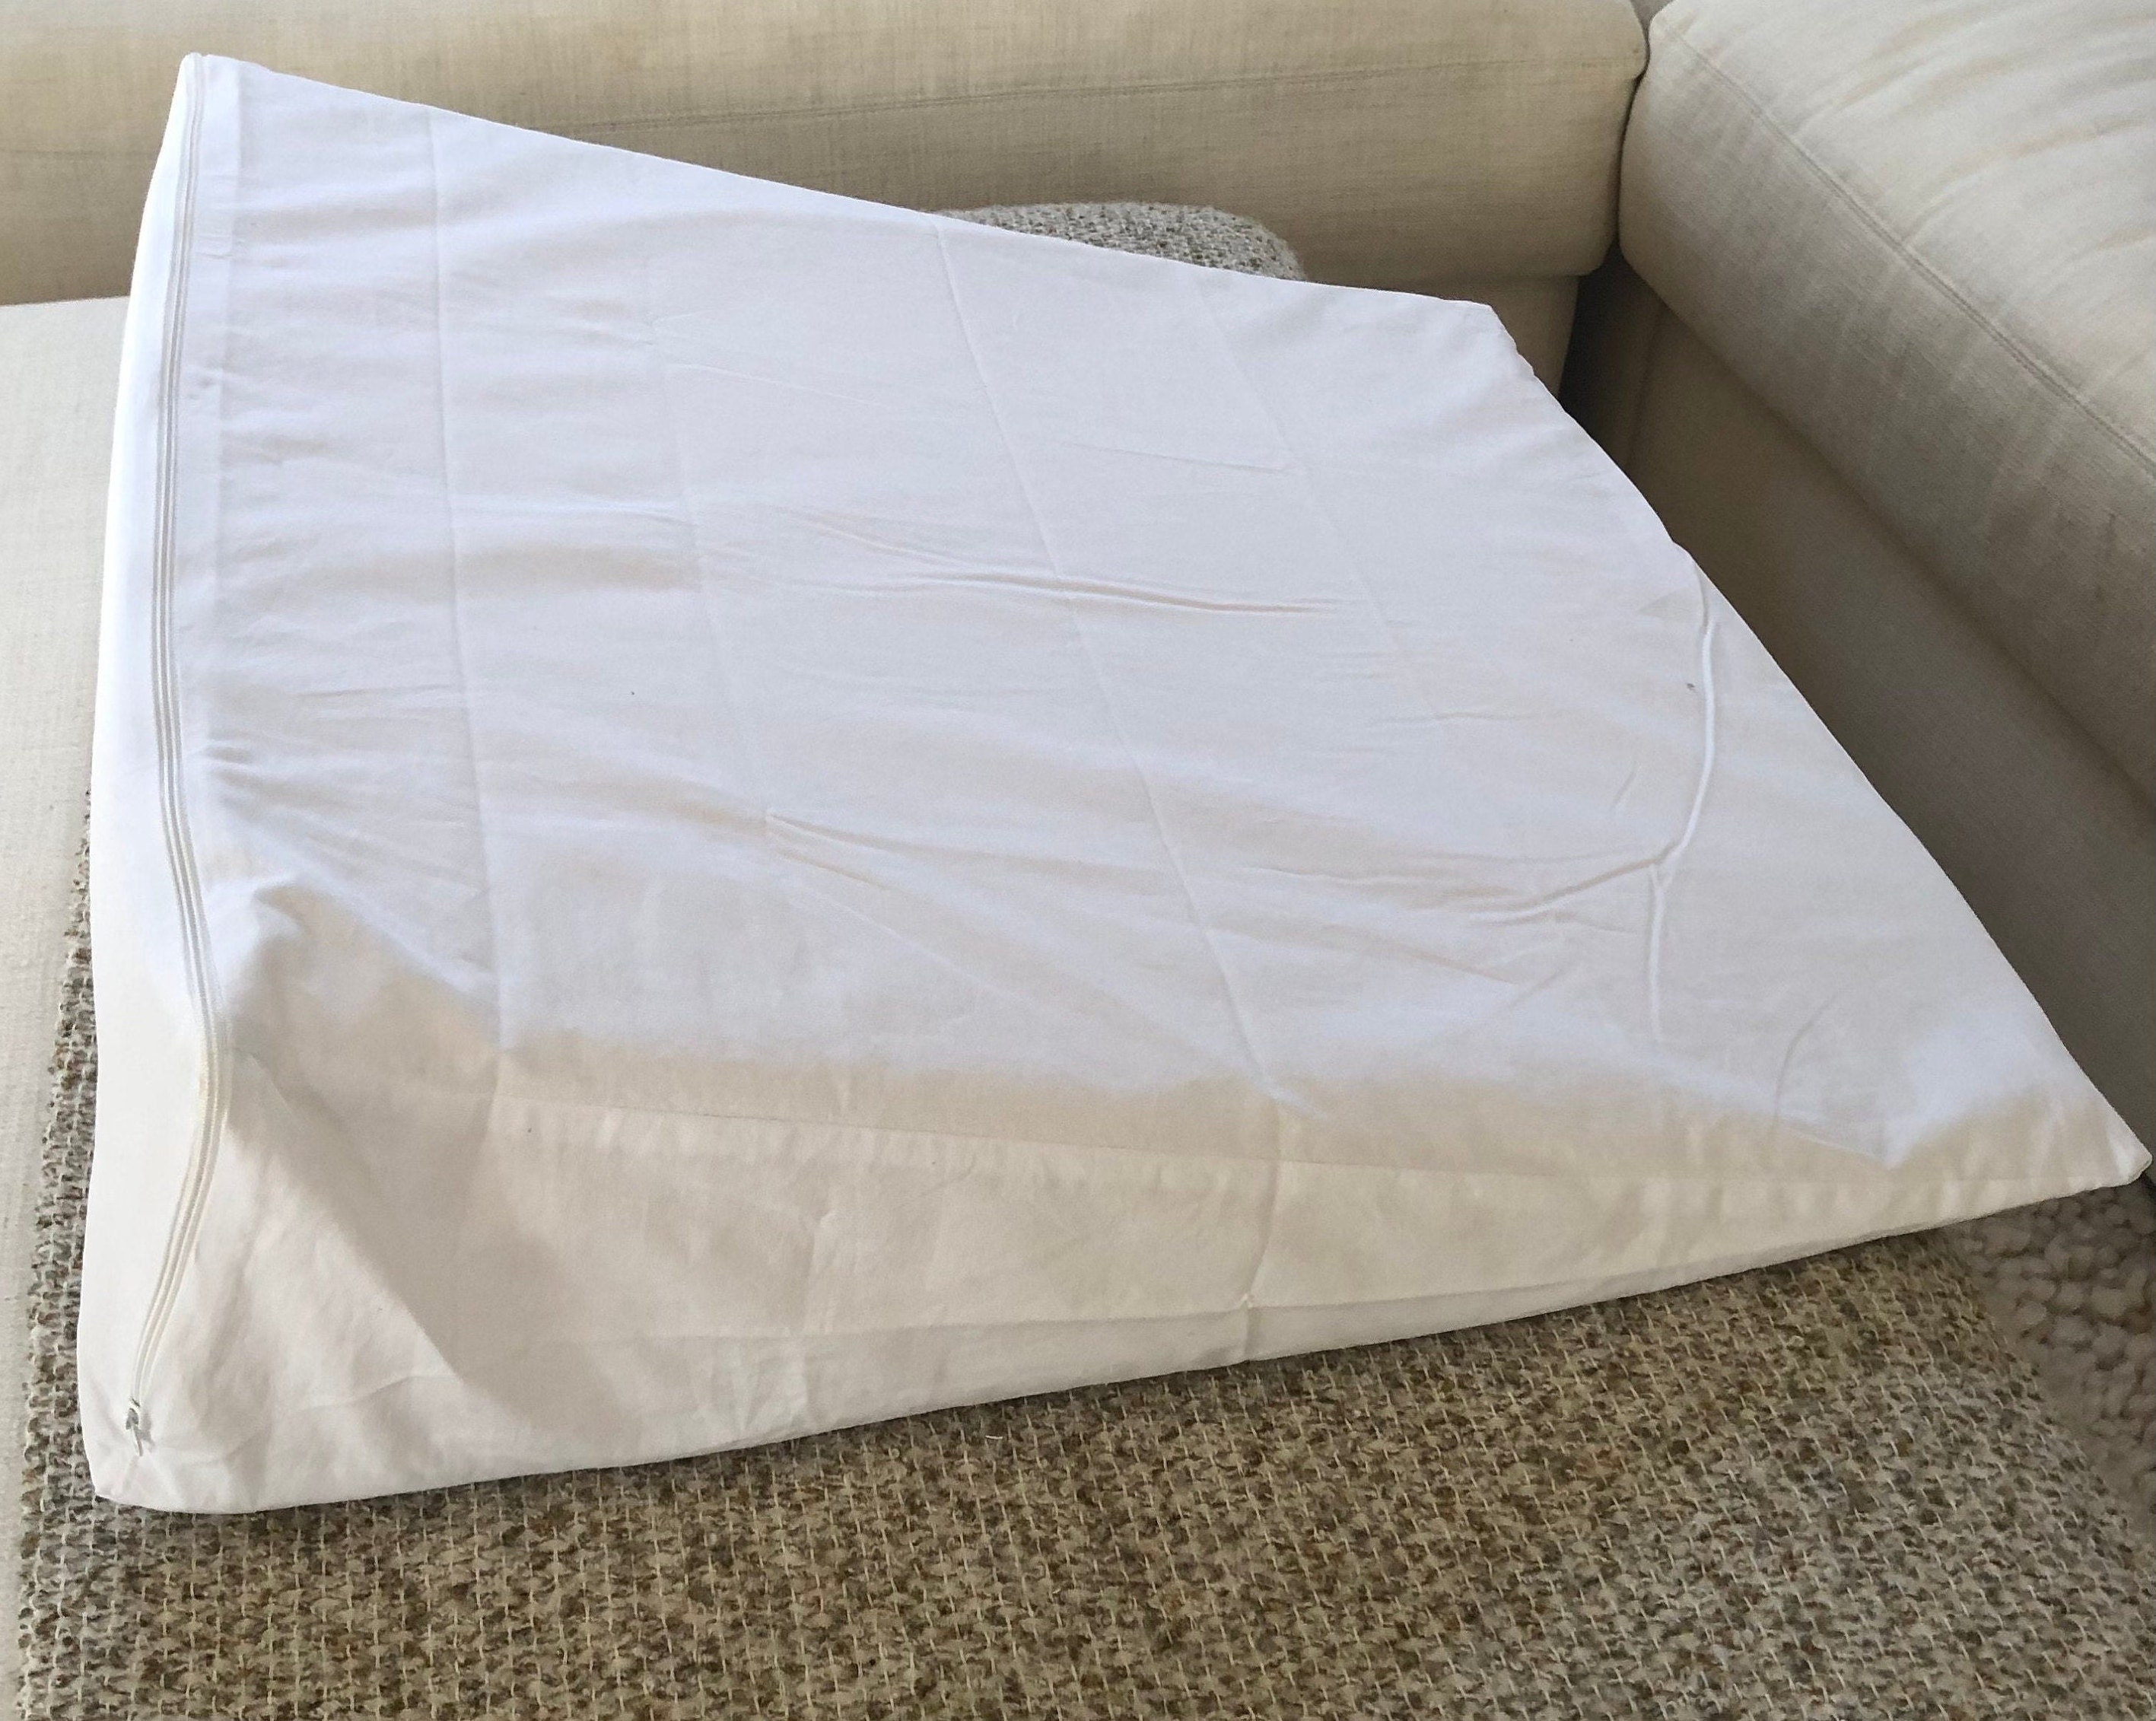 Sleeping Bed Wedge Pillow for Sleep Apnea, Snoring, Side Sleep/ Daybed